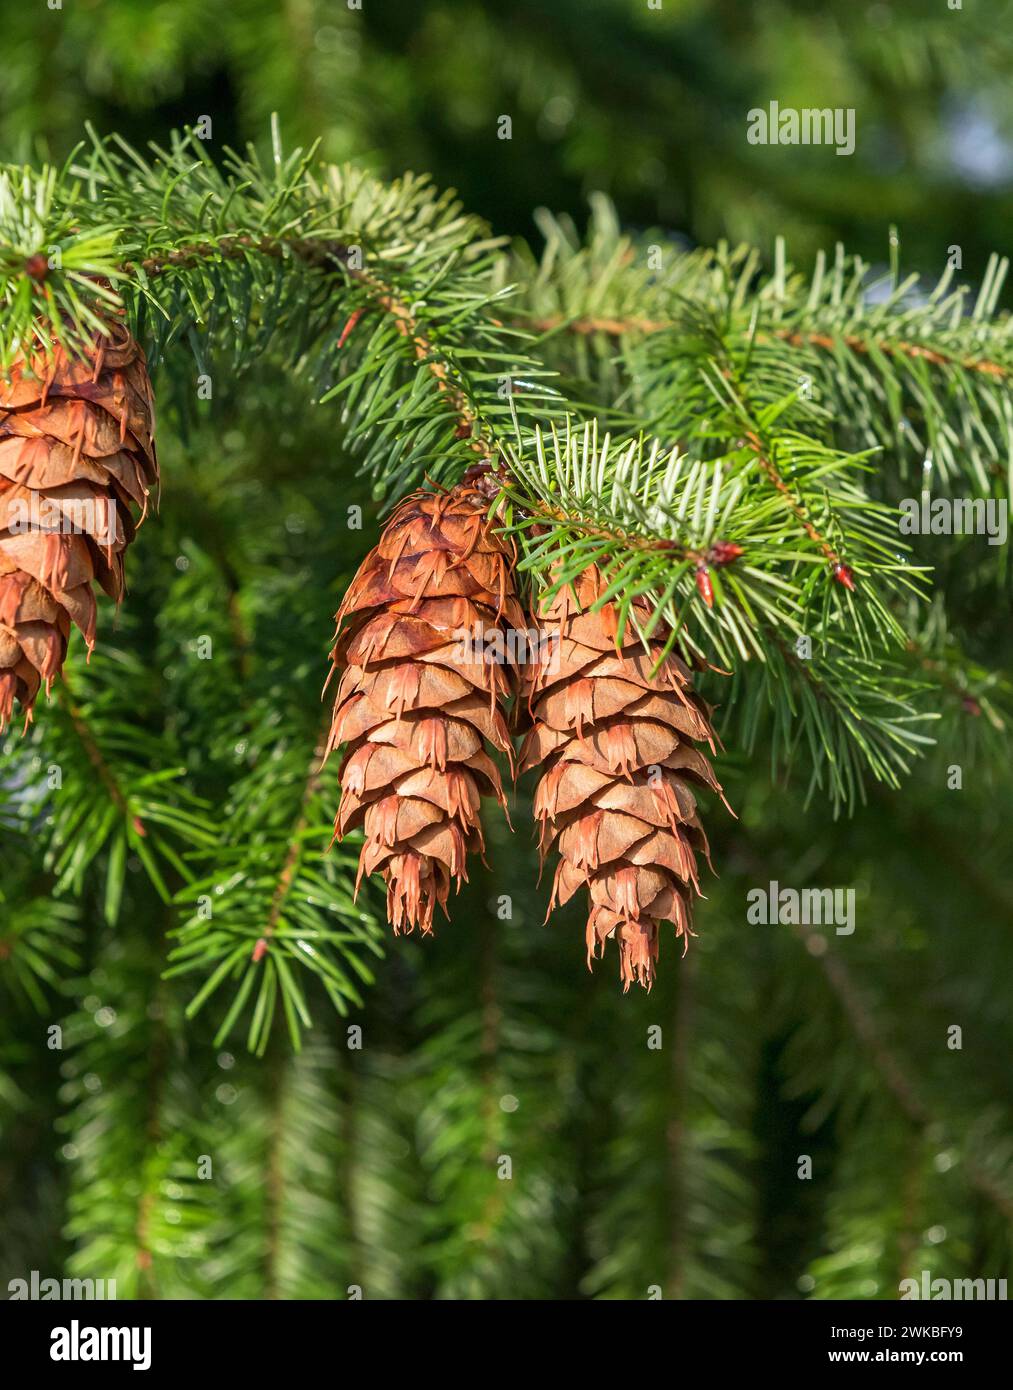 Douglas fir, Oregon pine (Pseudotsuga menziesii), cones on a tree, Europe, Bundesrepublik Deutschland Stock Photo